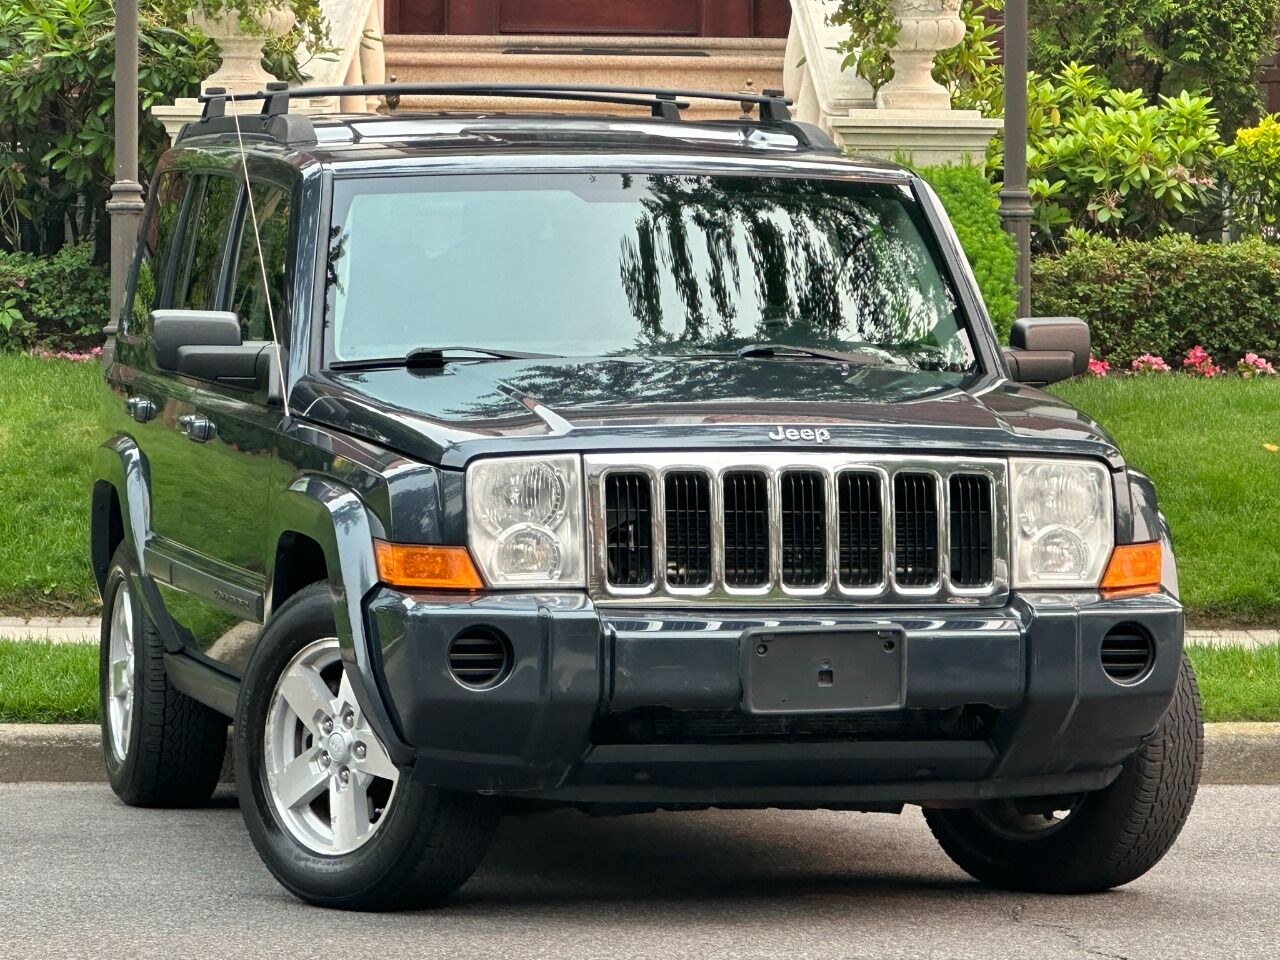 2007 Jeep Commander SUV - $7,900